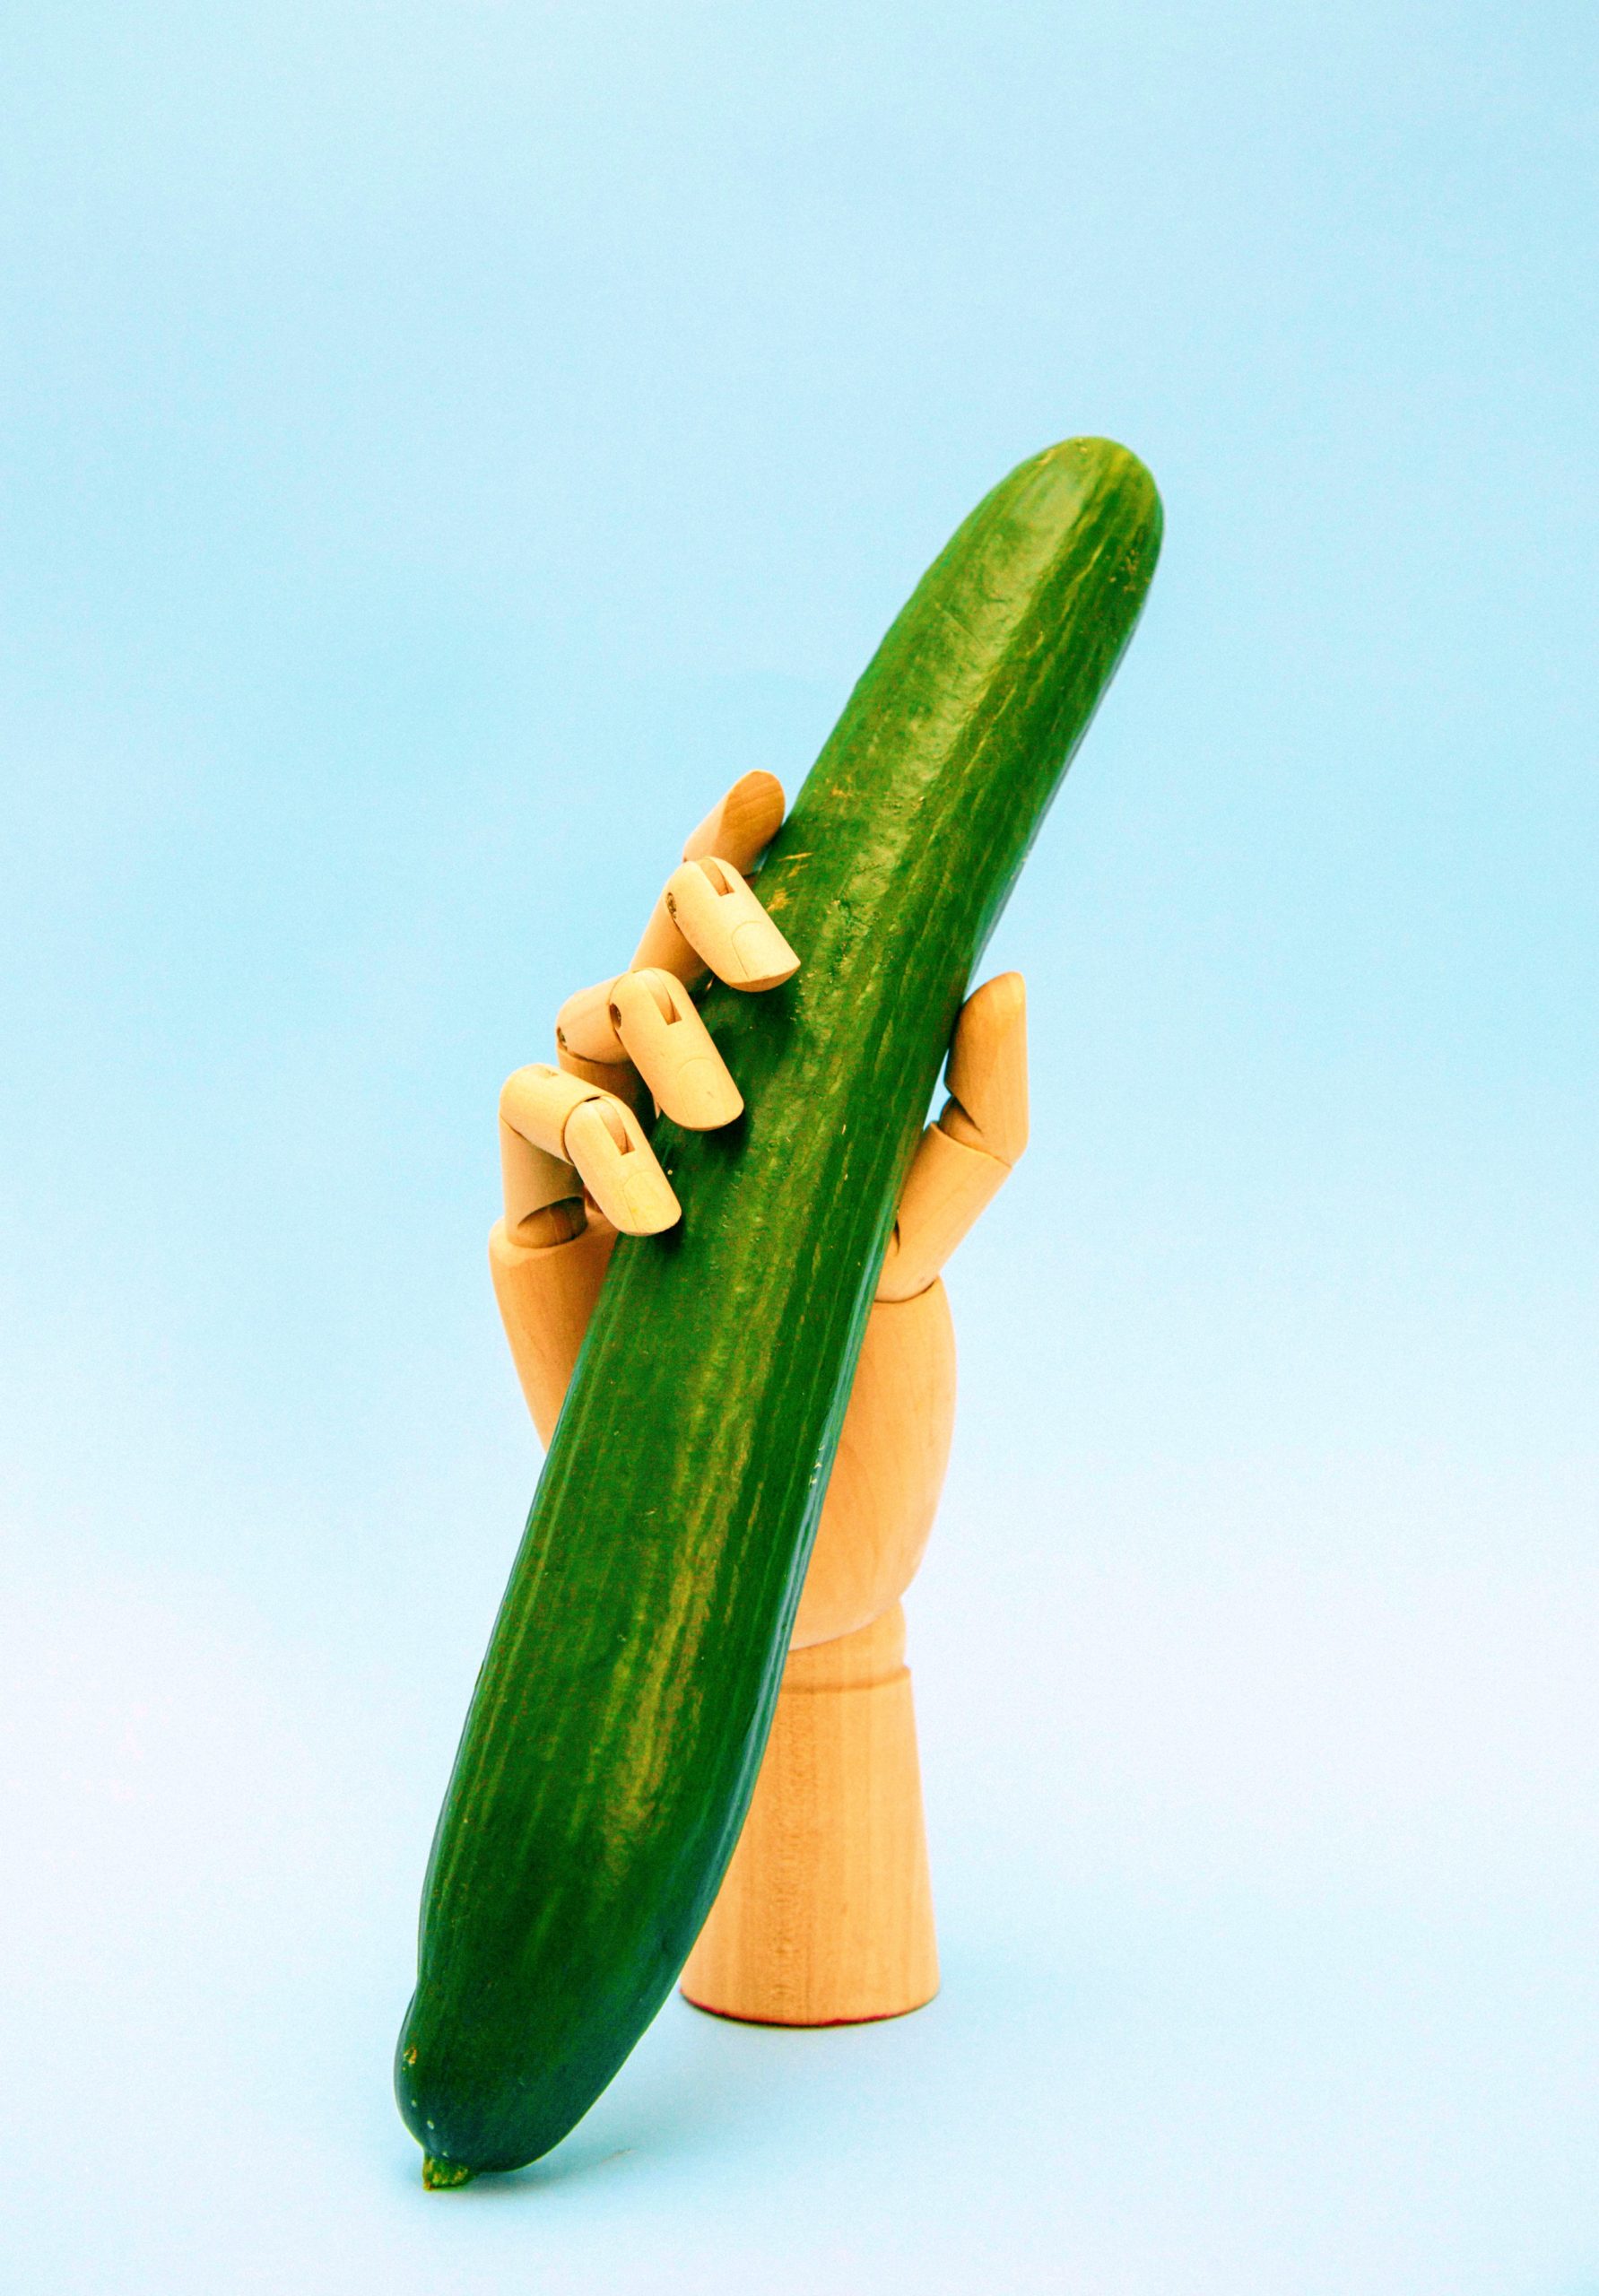 <img src="cucumber.jpg"cucumber men's sexual health"/> 